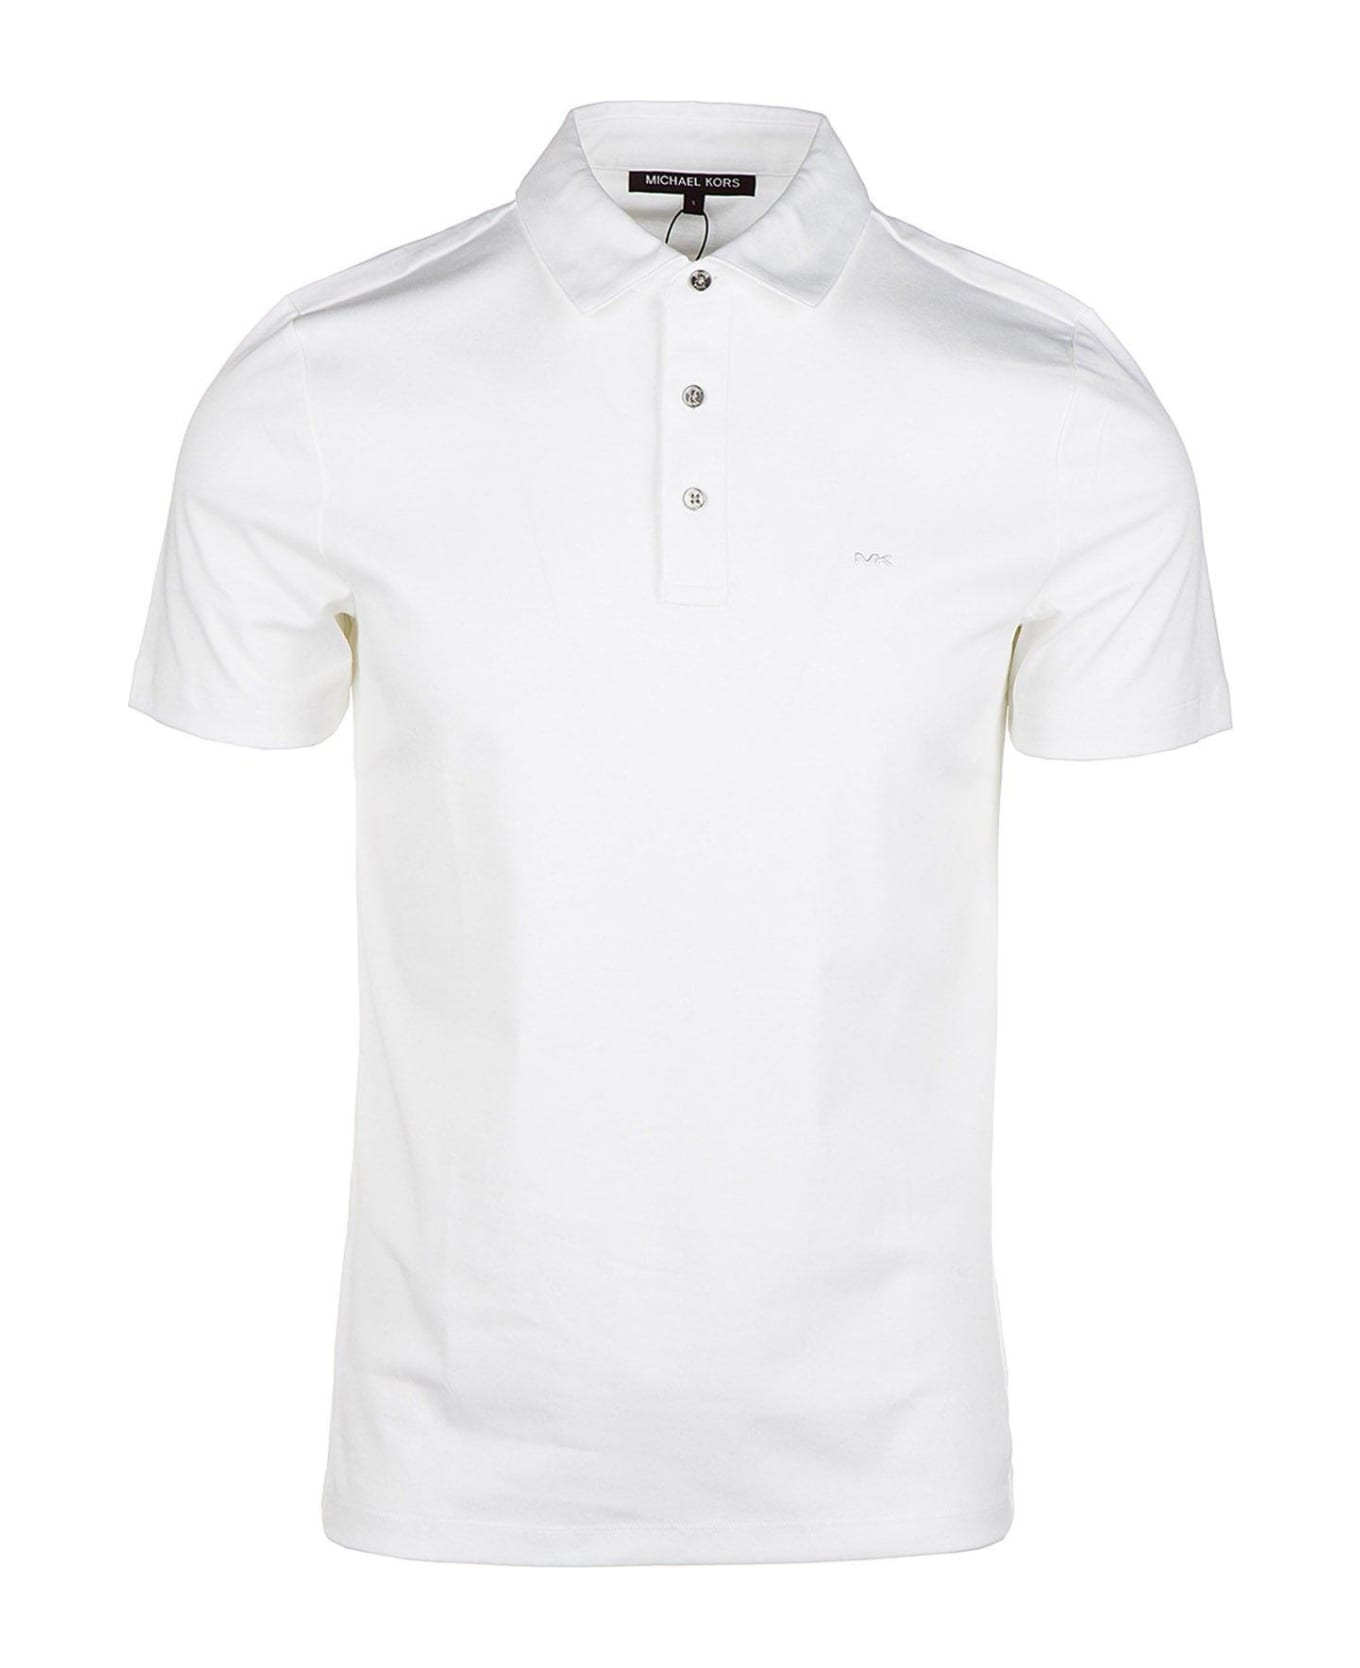 Michael Kors Logo Embroidered sweater Polo Shirt - White